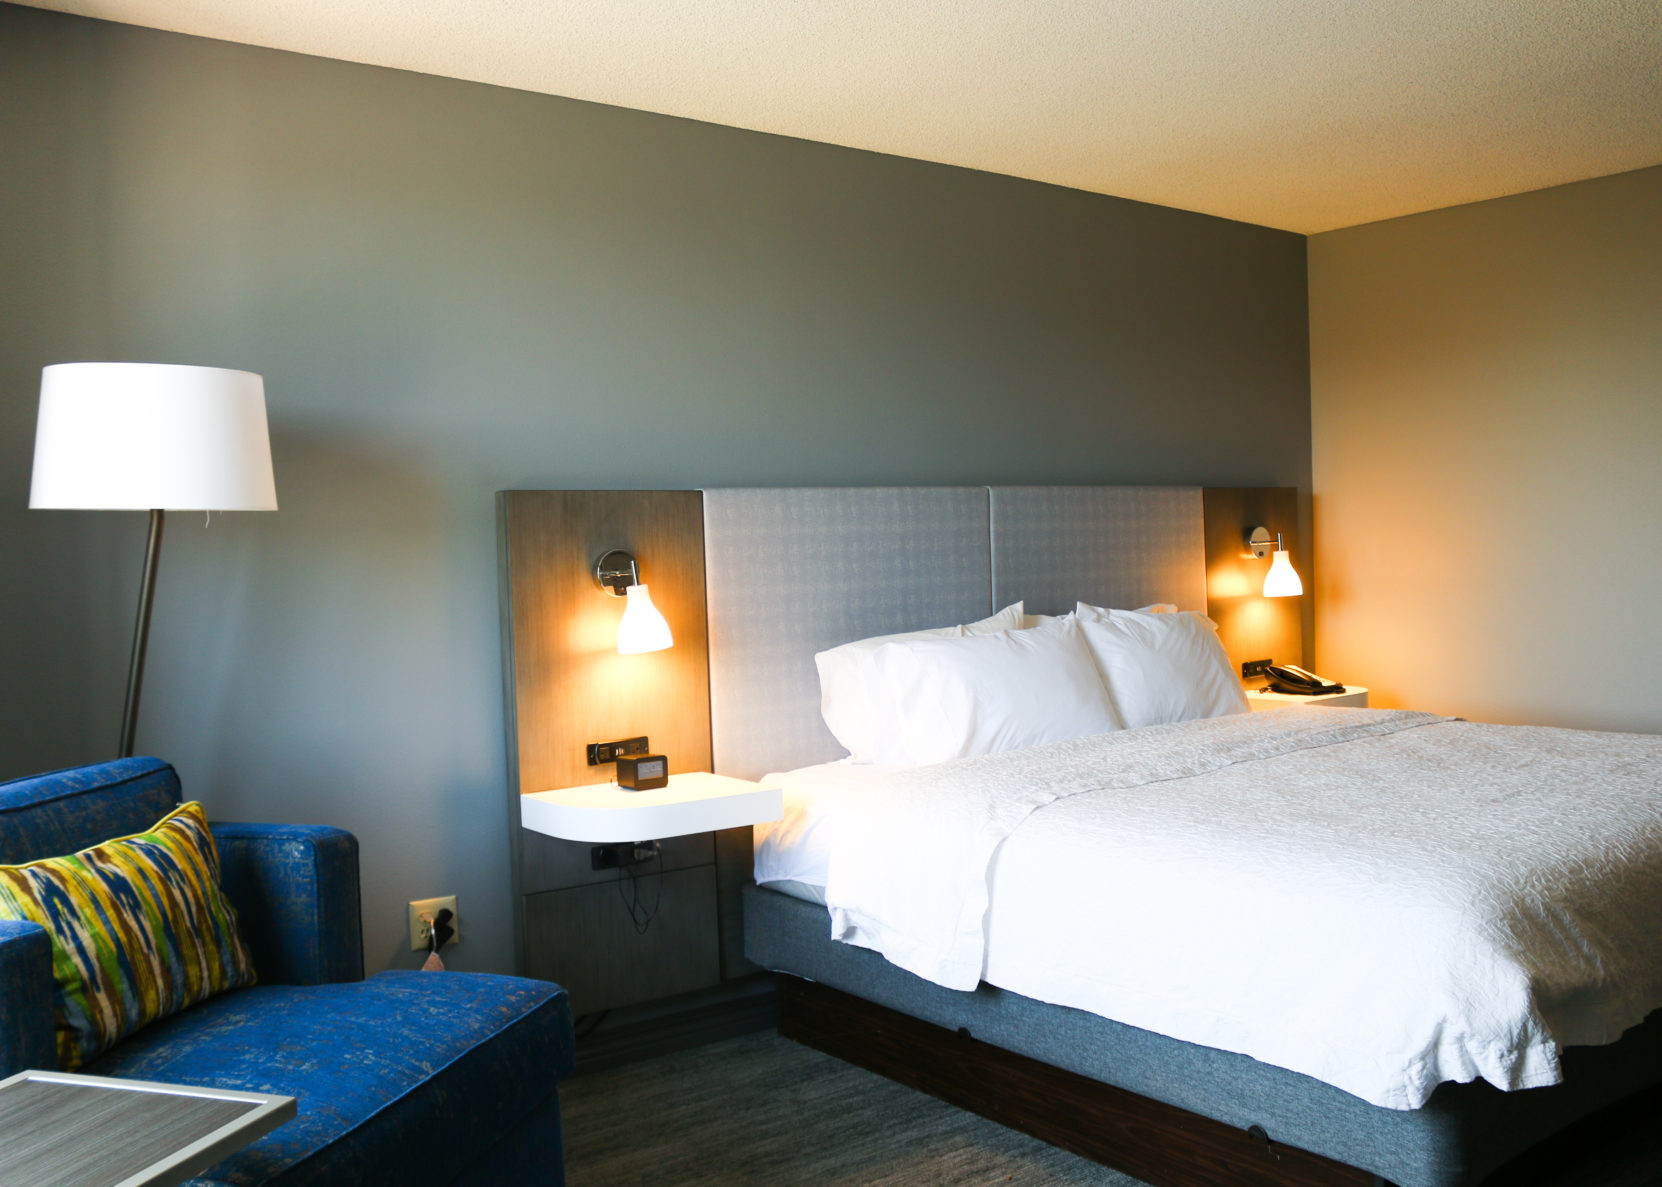 A hotel room inside of Hampton Inn KC, renovated by McCownGordon Construction